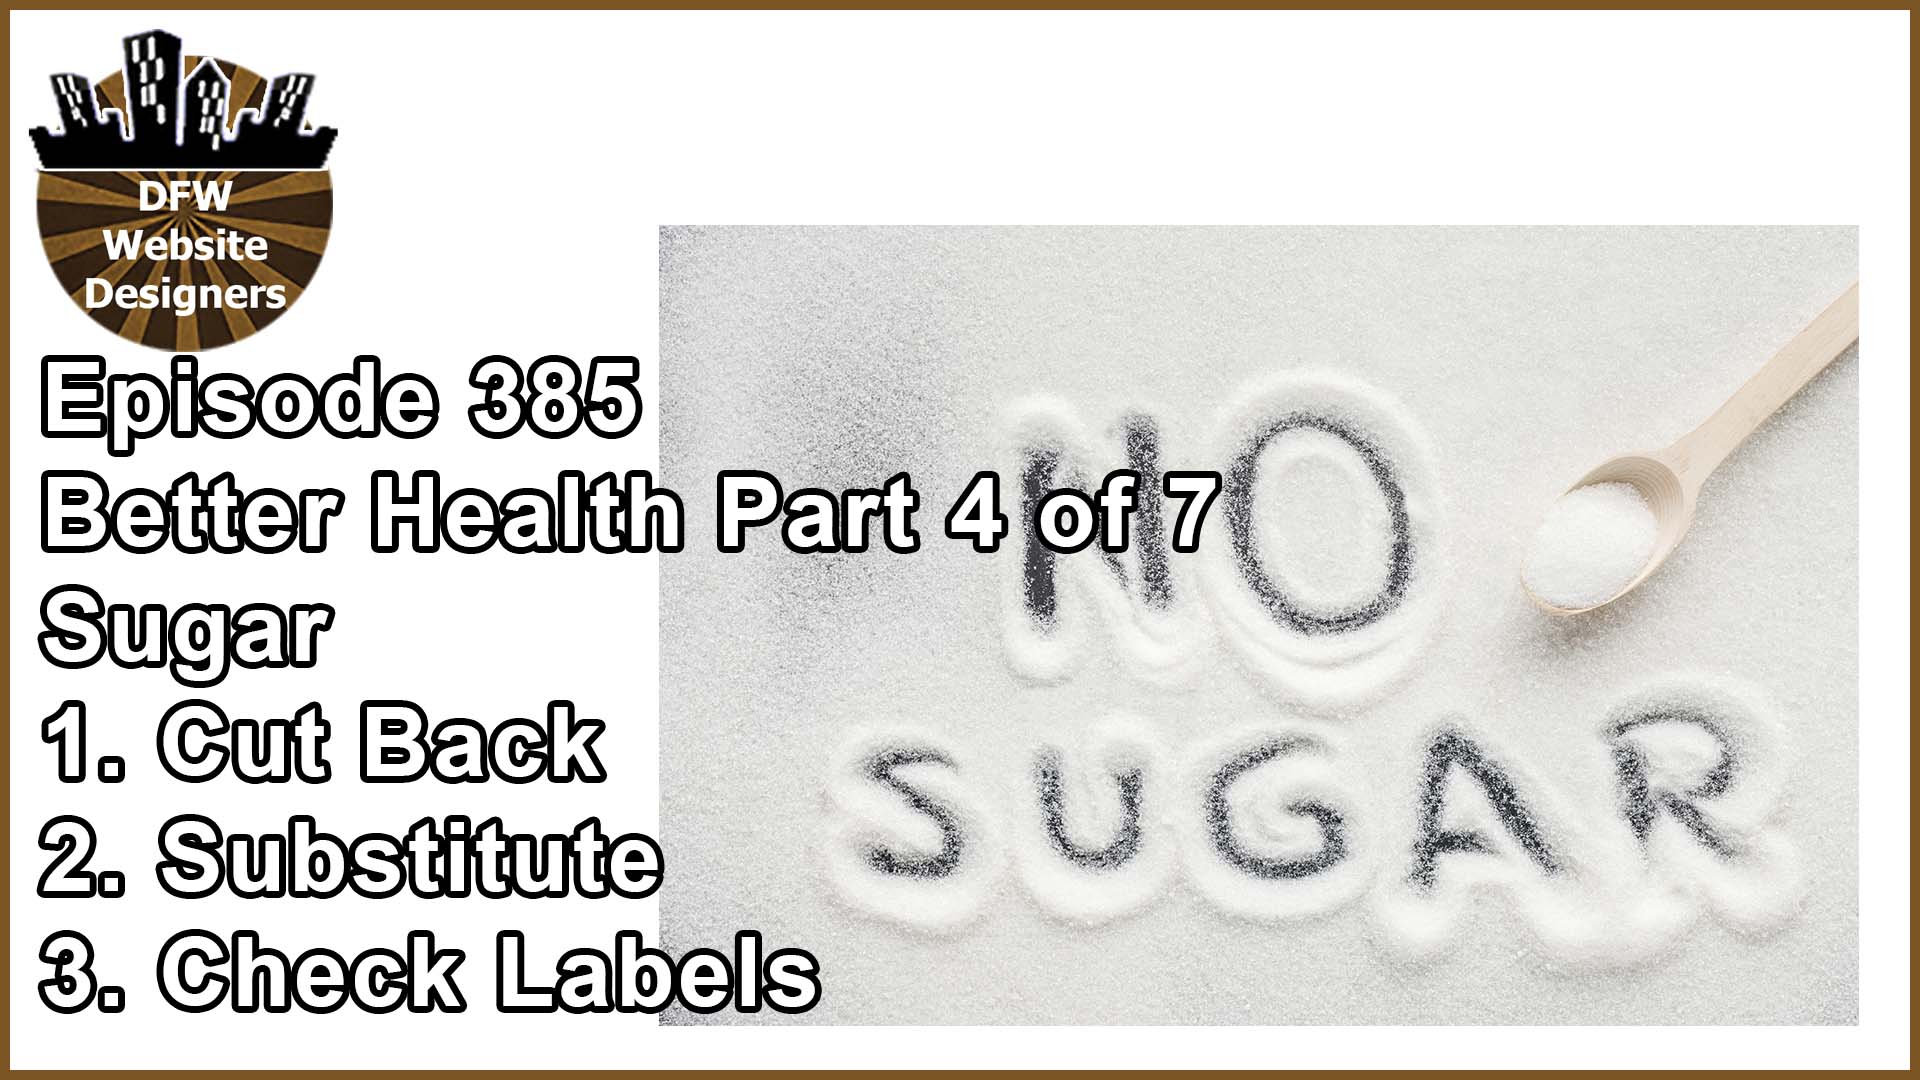 Episode 385 Better Health Pt4 Sugar: Cut Back, Substitute, Check Labels